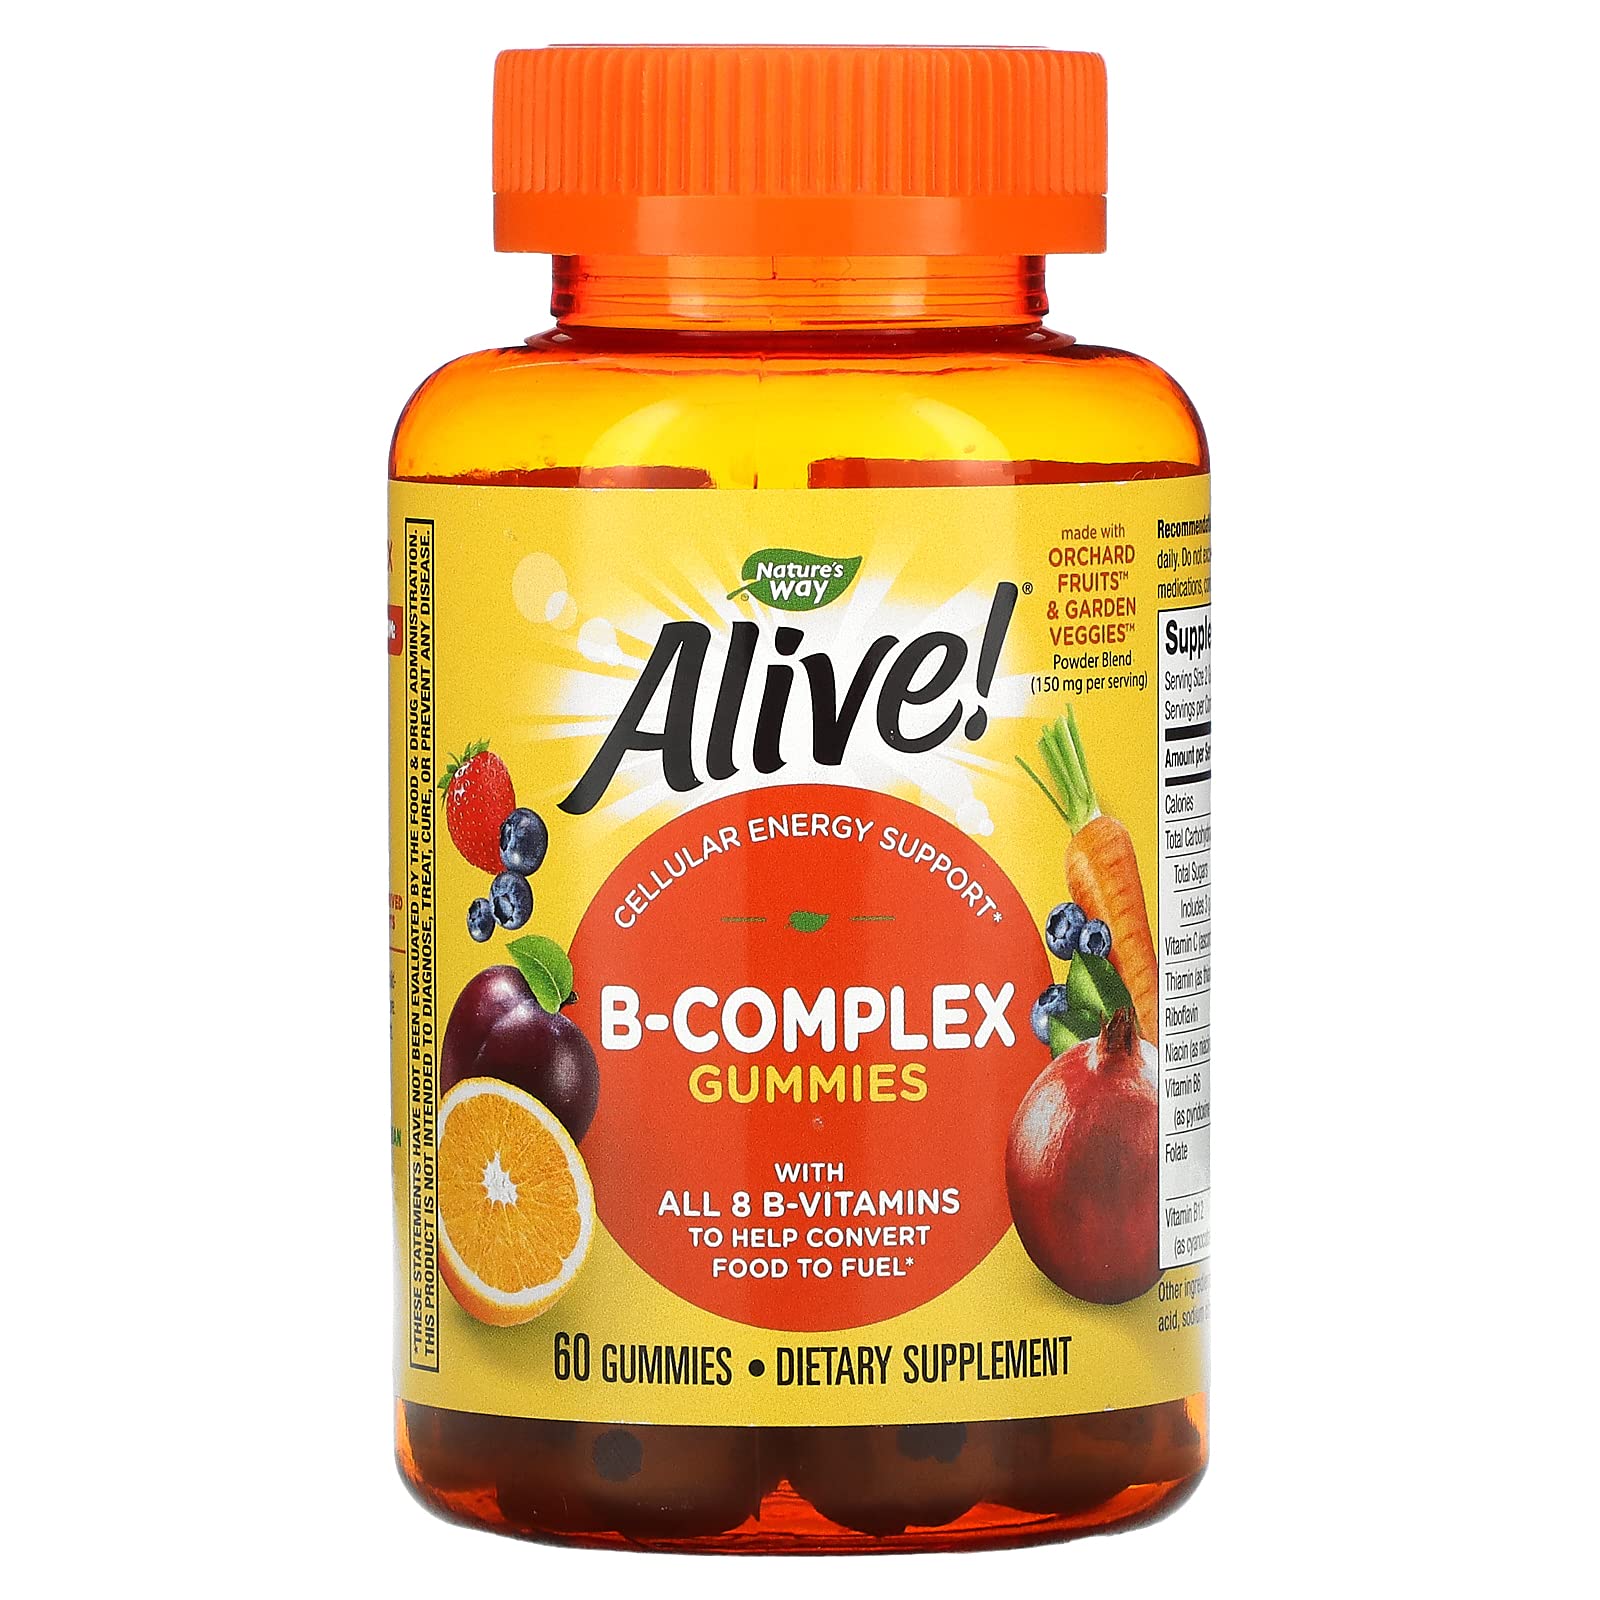 Nature's Way Alive! B-Complex Gummies, Cellular Energy Support*, 8 B-Vitamins, Vegetarian, Mango Flavored, 60 Gummies